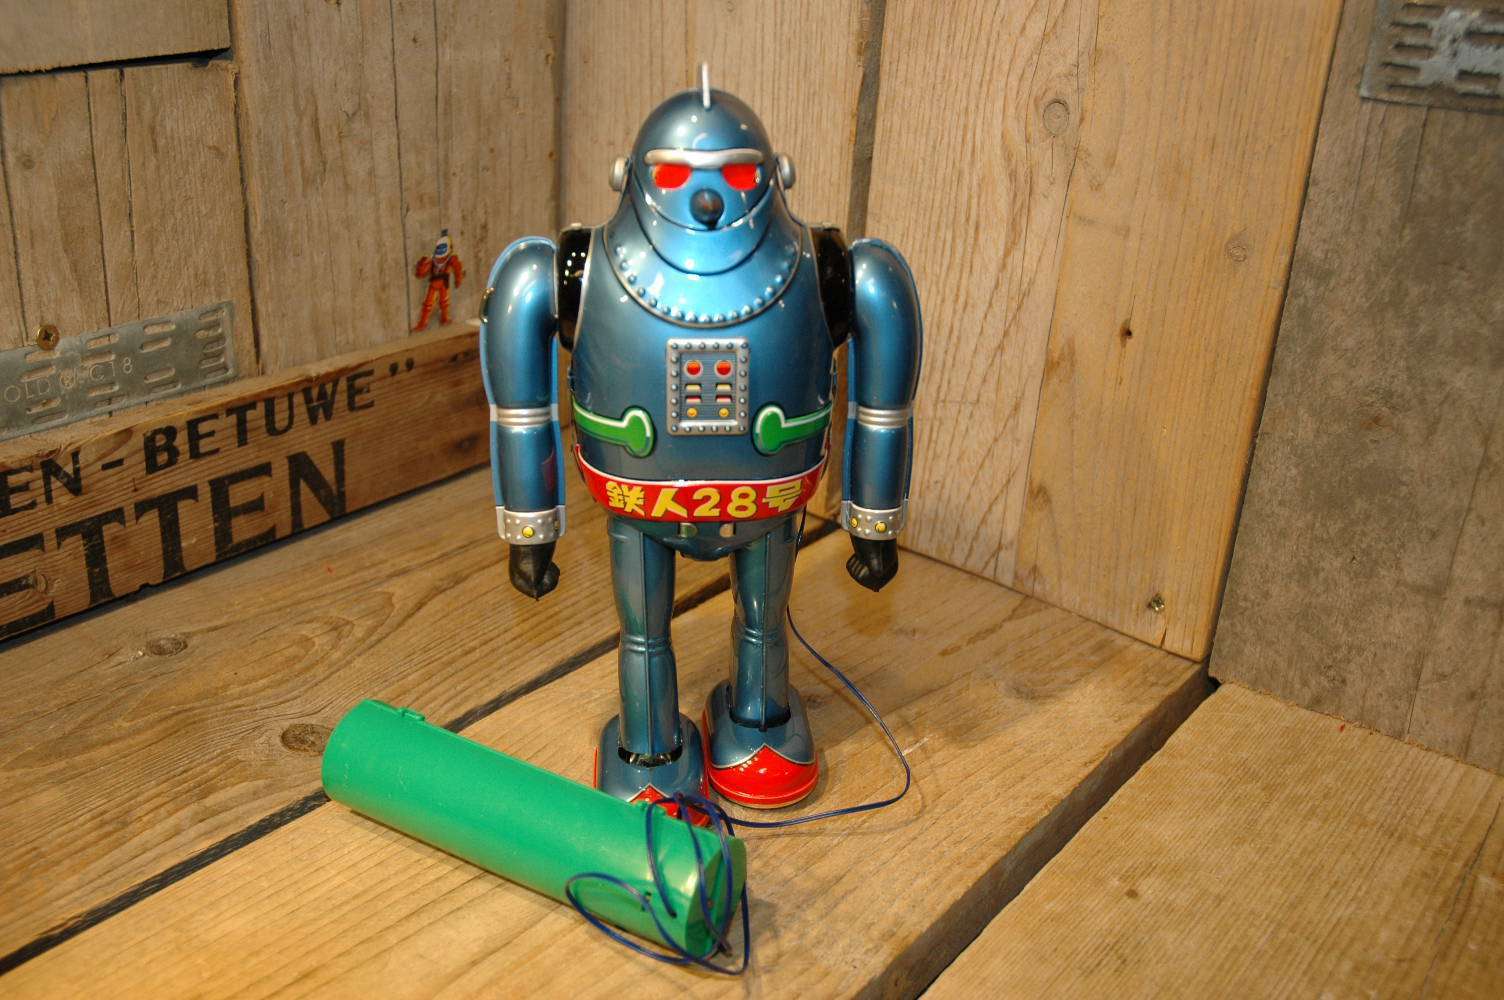 Osaka Tin Toy Institute – Gigantor no.5 Tetsujin 28 Robot Light Blue Variation.